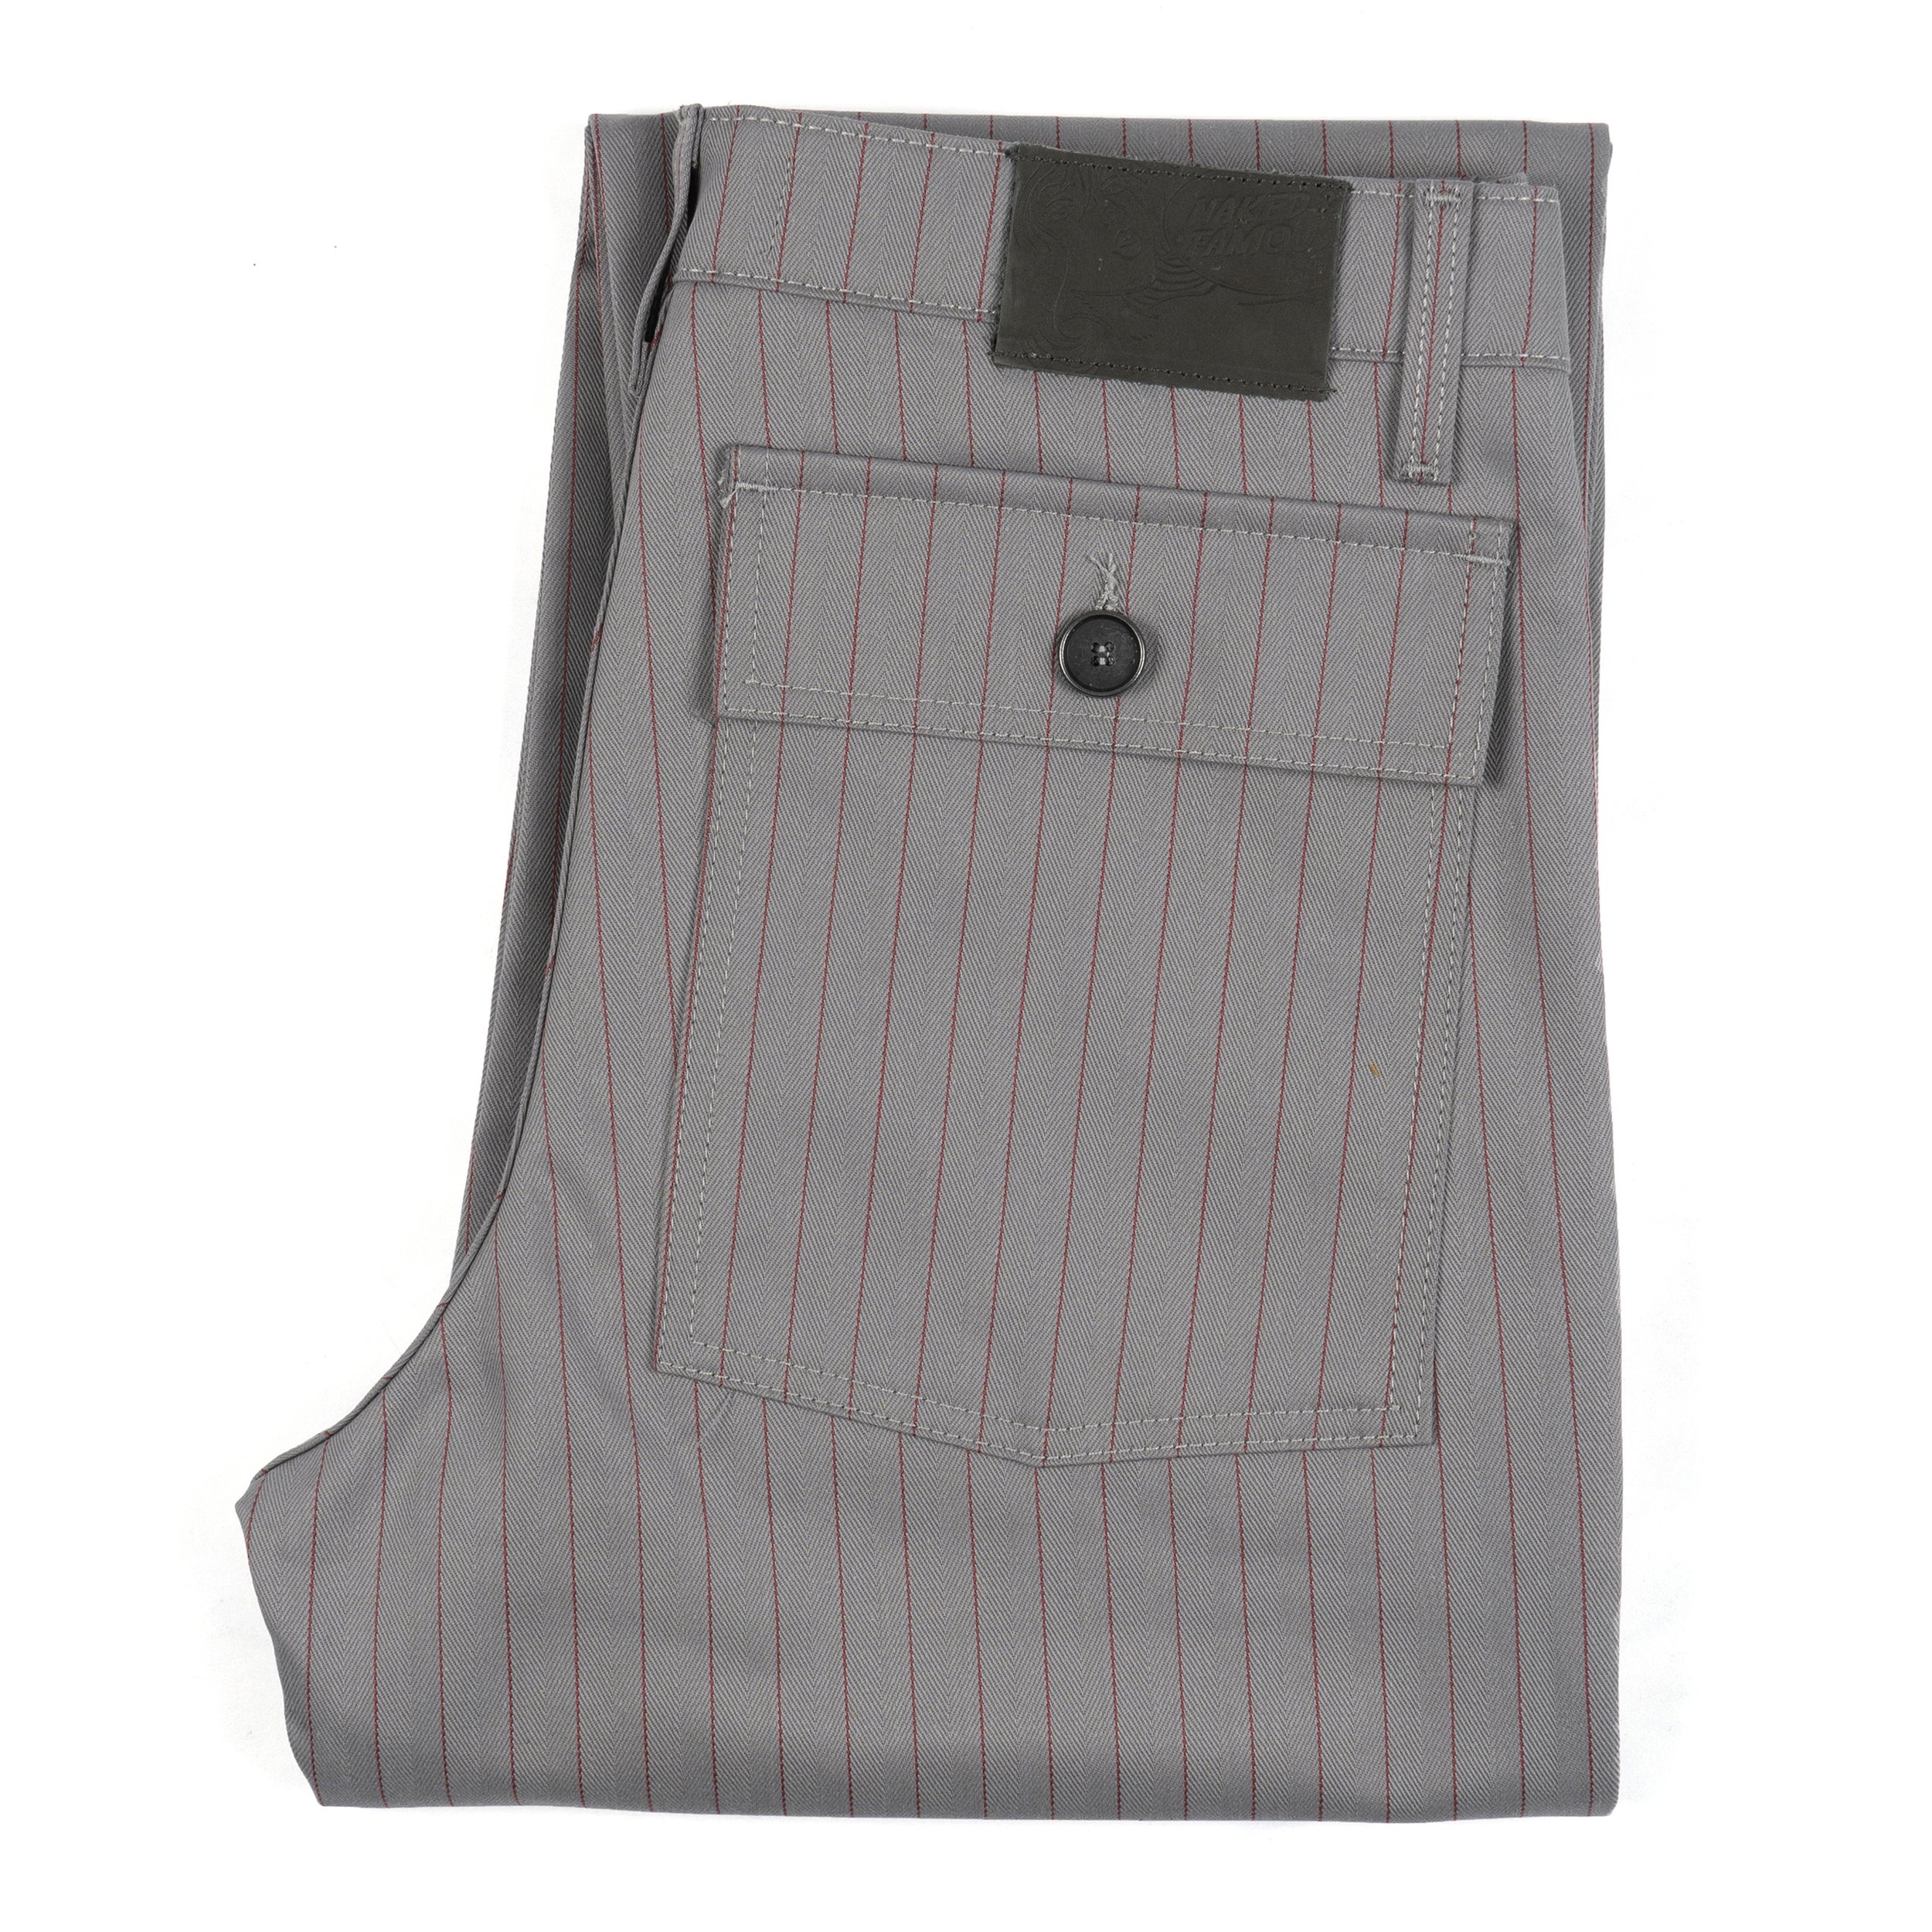  Work Pant - Repro Workwear Twill Grey - folded 